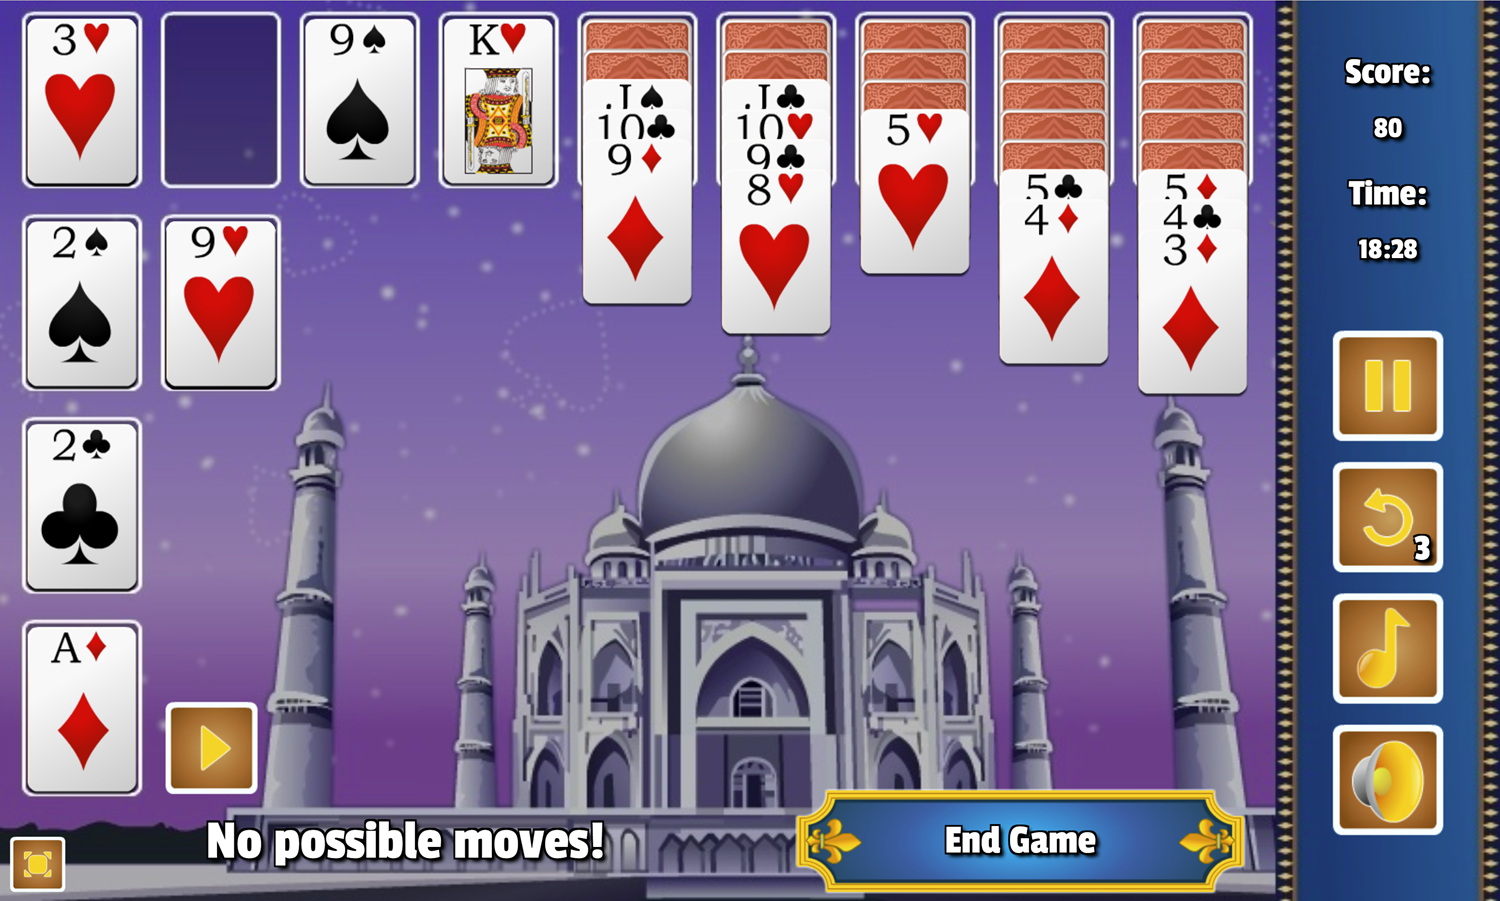 Taj Mahal Solitaire Game No Possible Moves Screenshot.